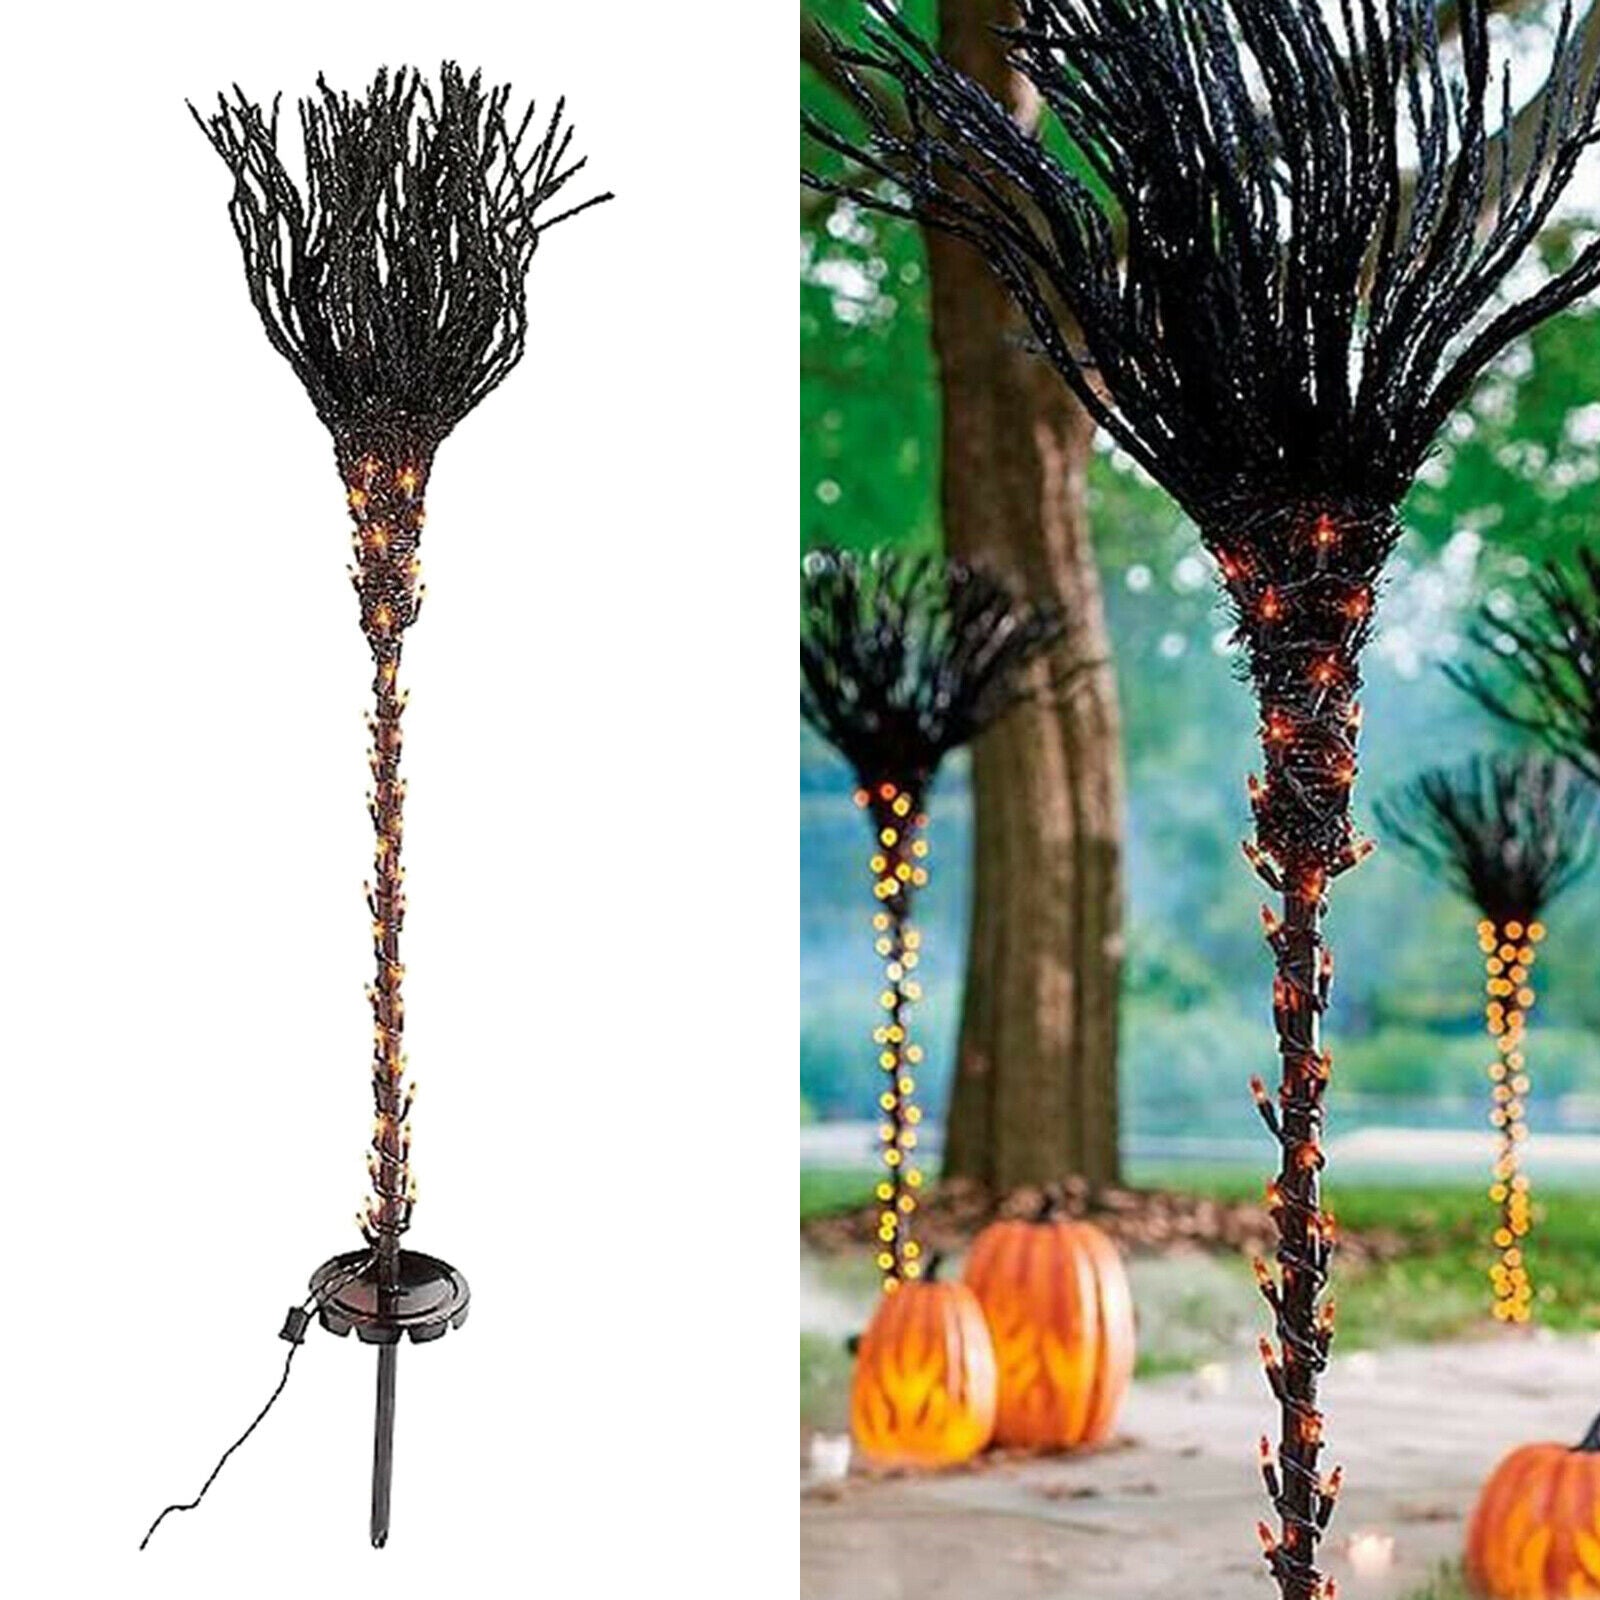 Pre-lit broom, Halloween decoration, lighted broomstick